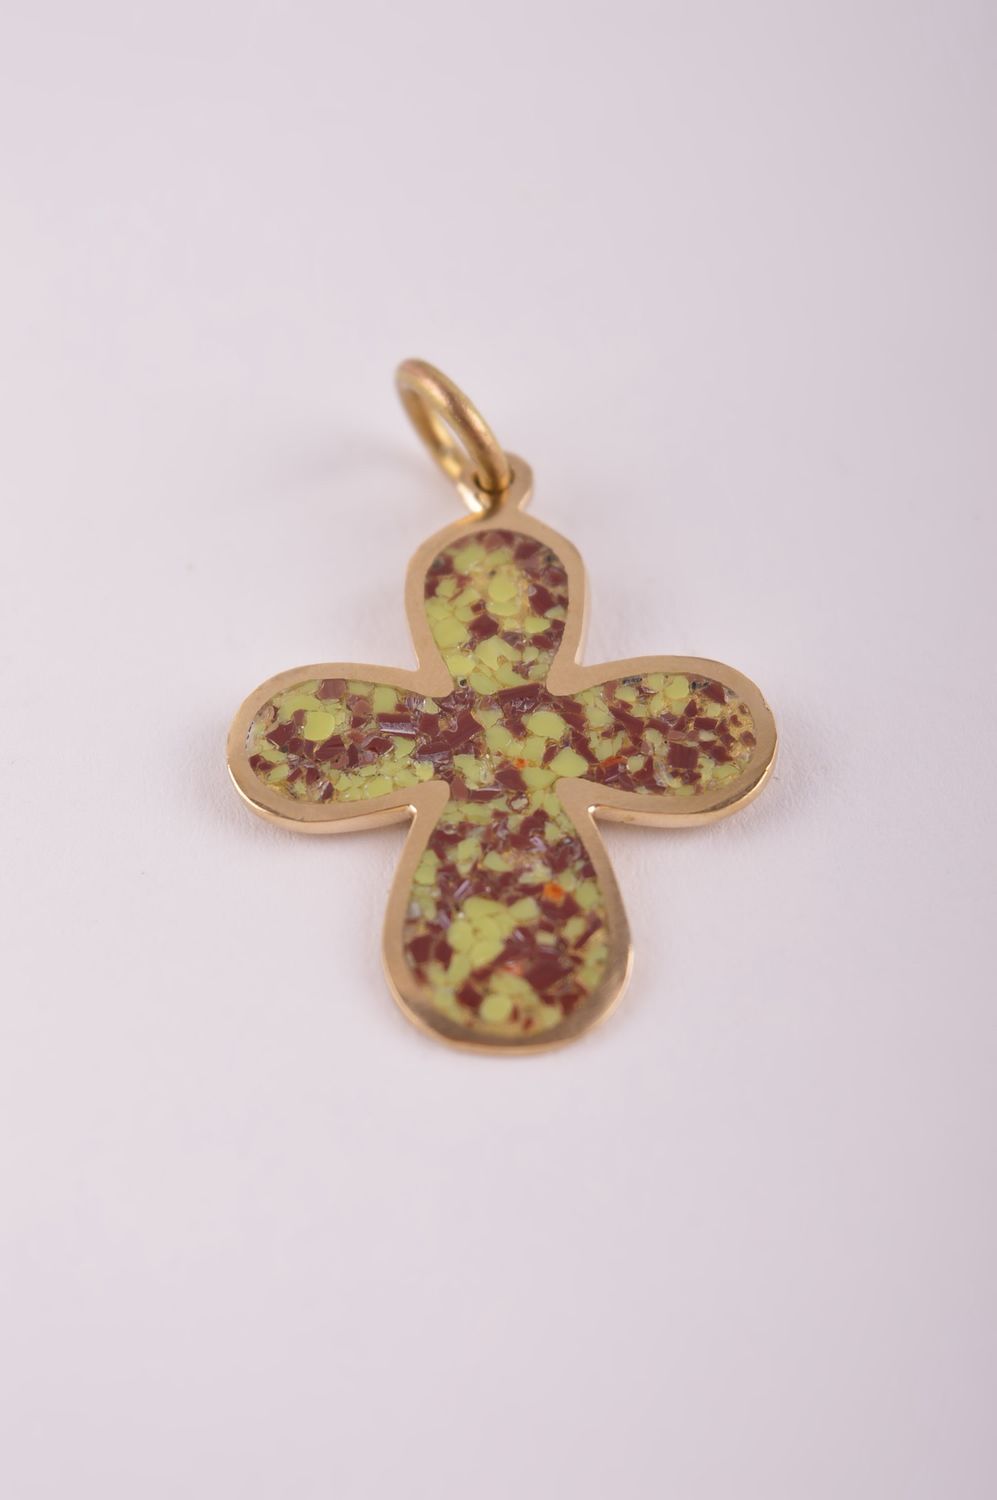 Unusual handmade metal cross pectoral cross pendant gemstone pendant for girls photo 2